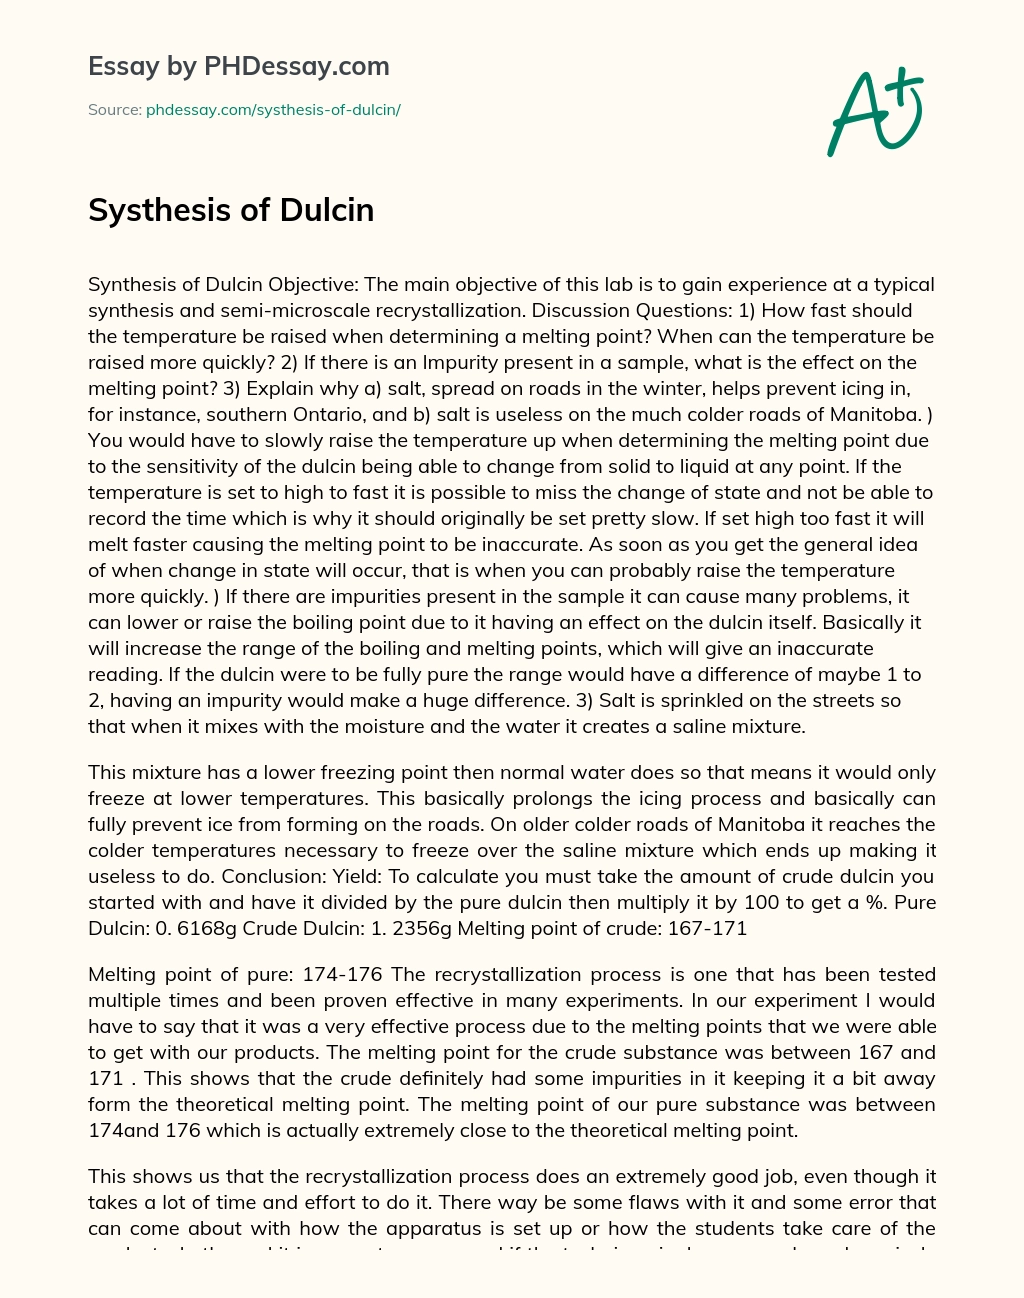 Systhesis of Dulcin essay